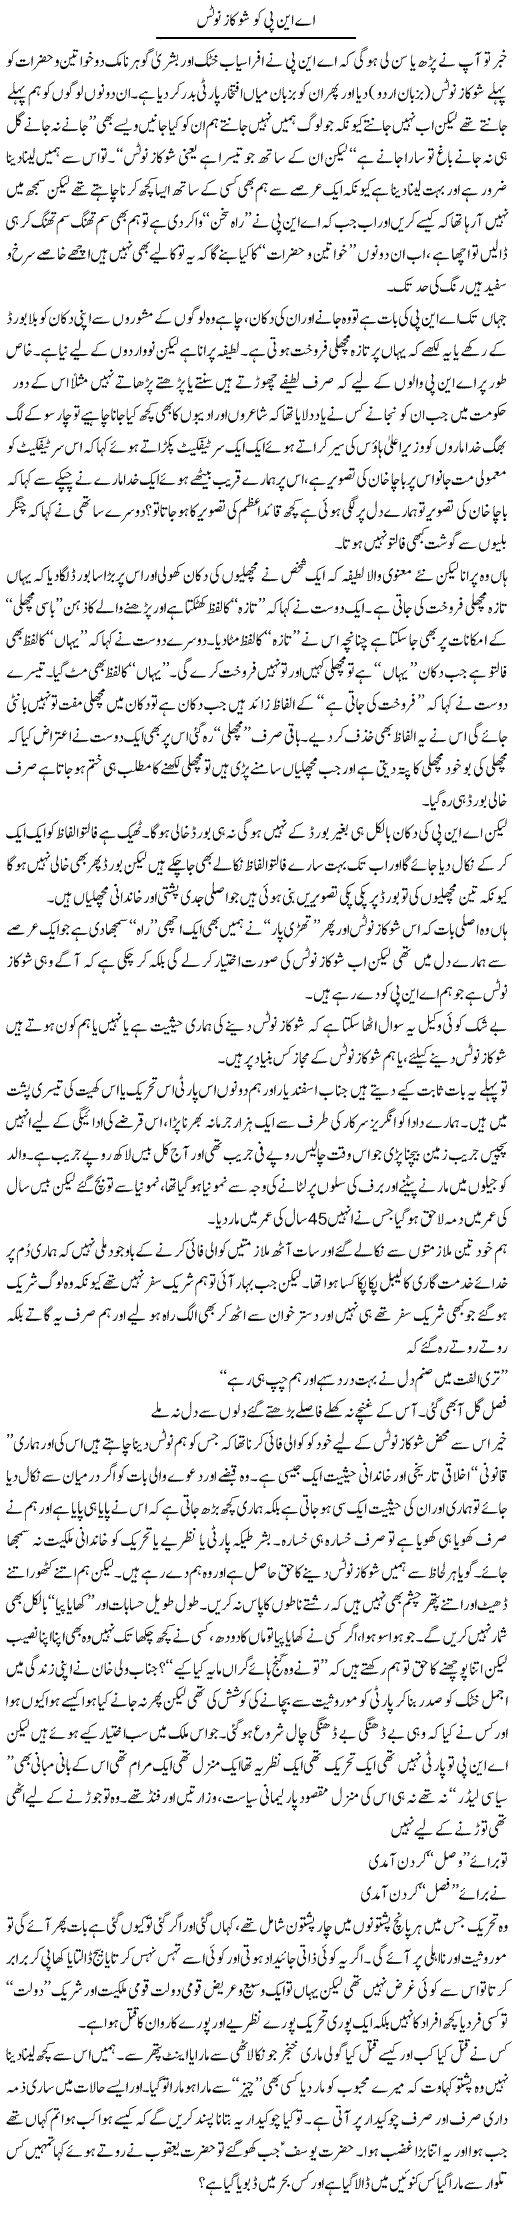 Anp Ko Show Cause Notice | Saad Ullah Jan Barq | Daily Urdu Columns